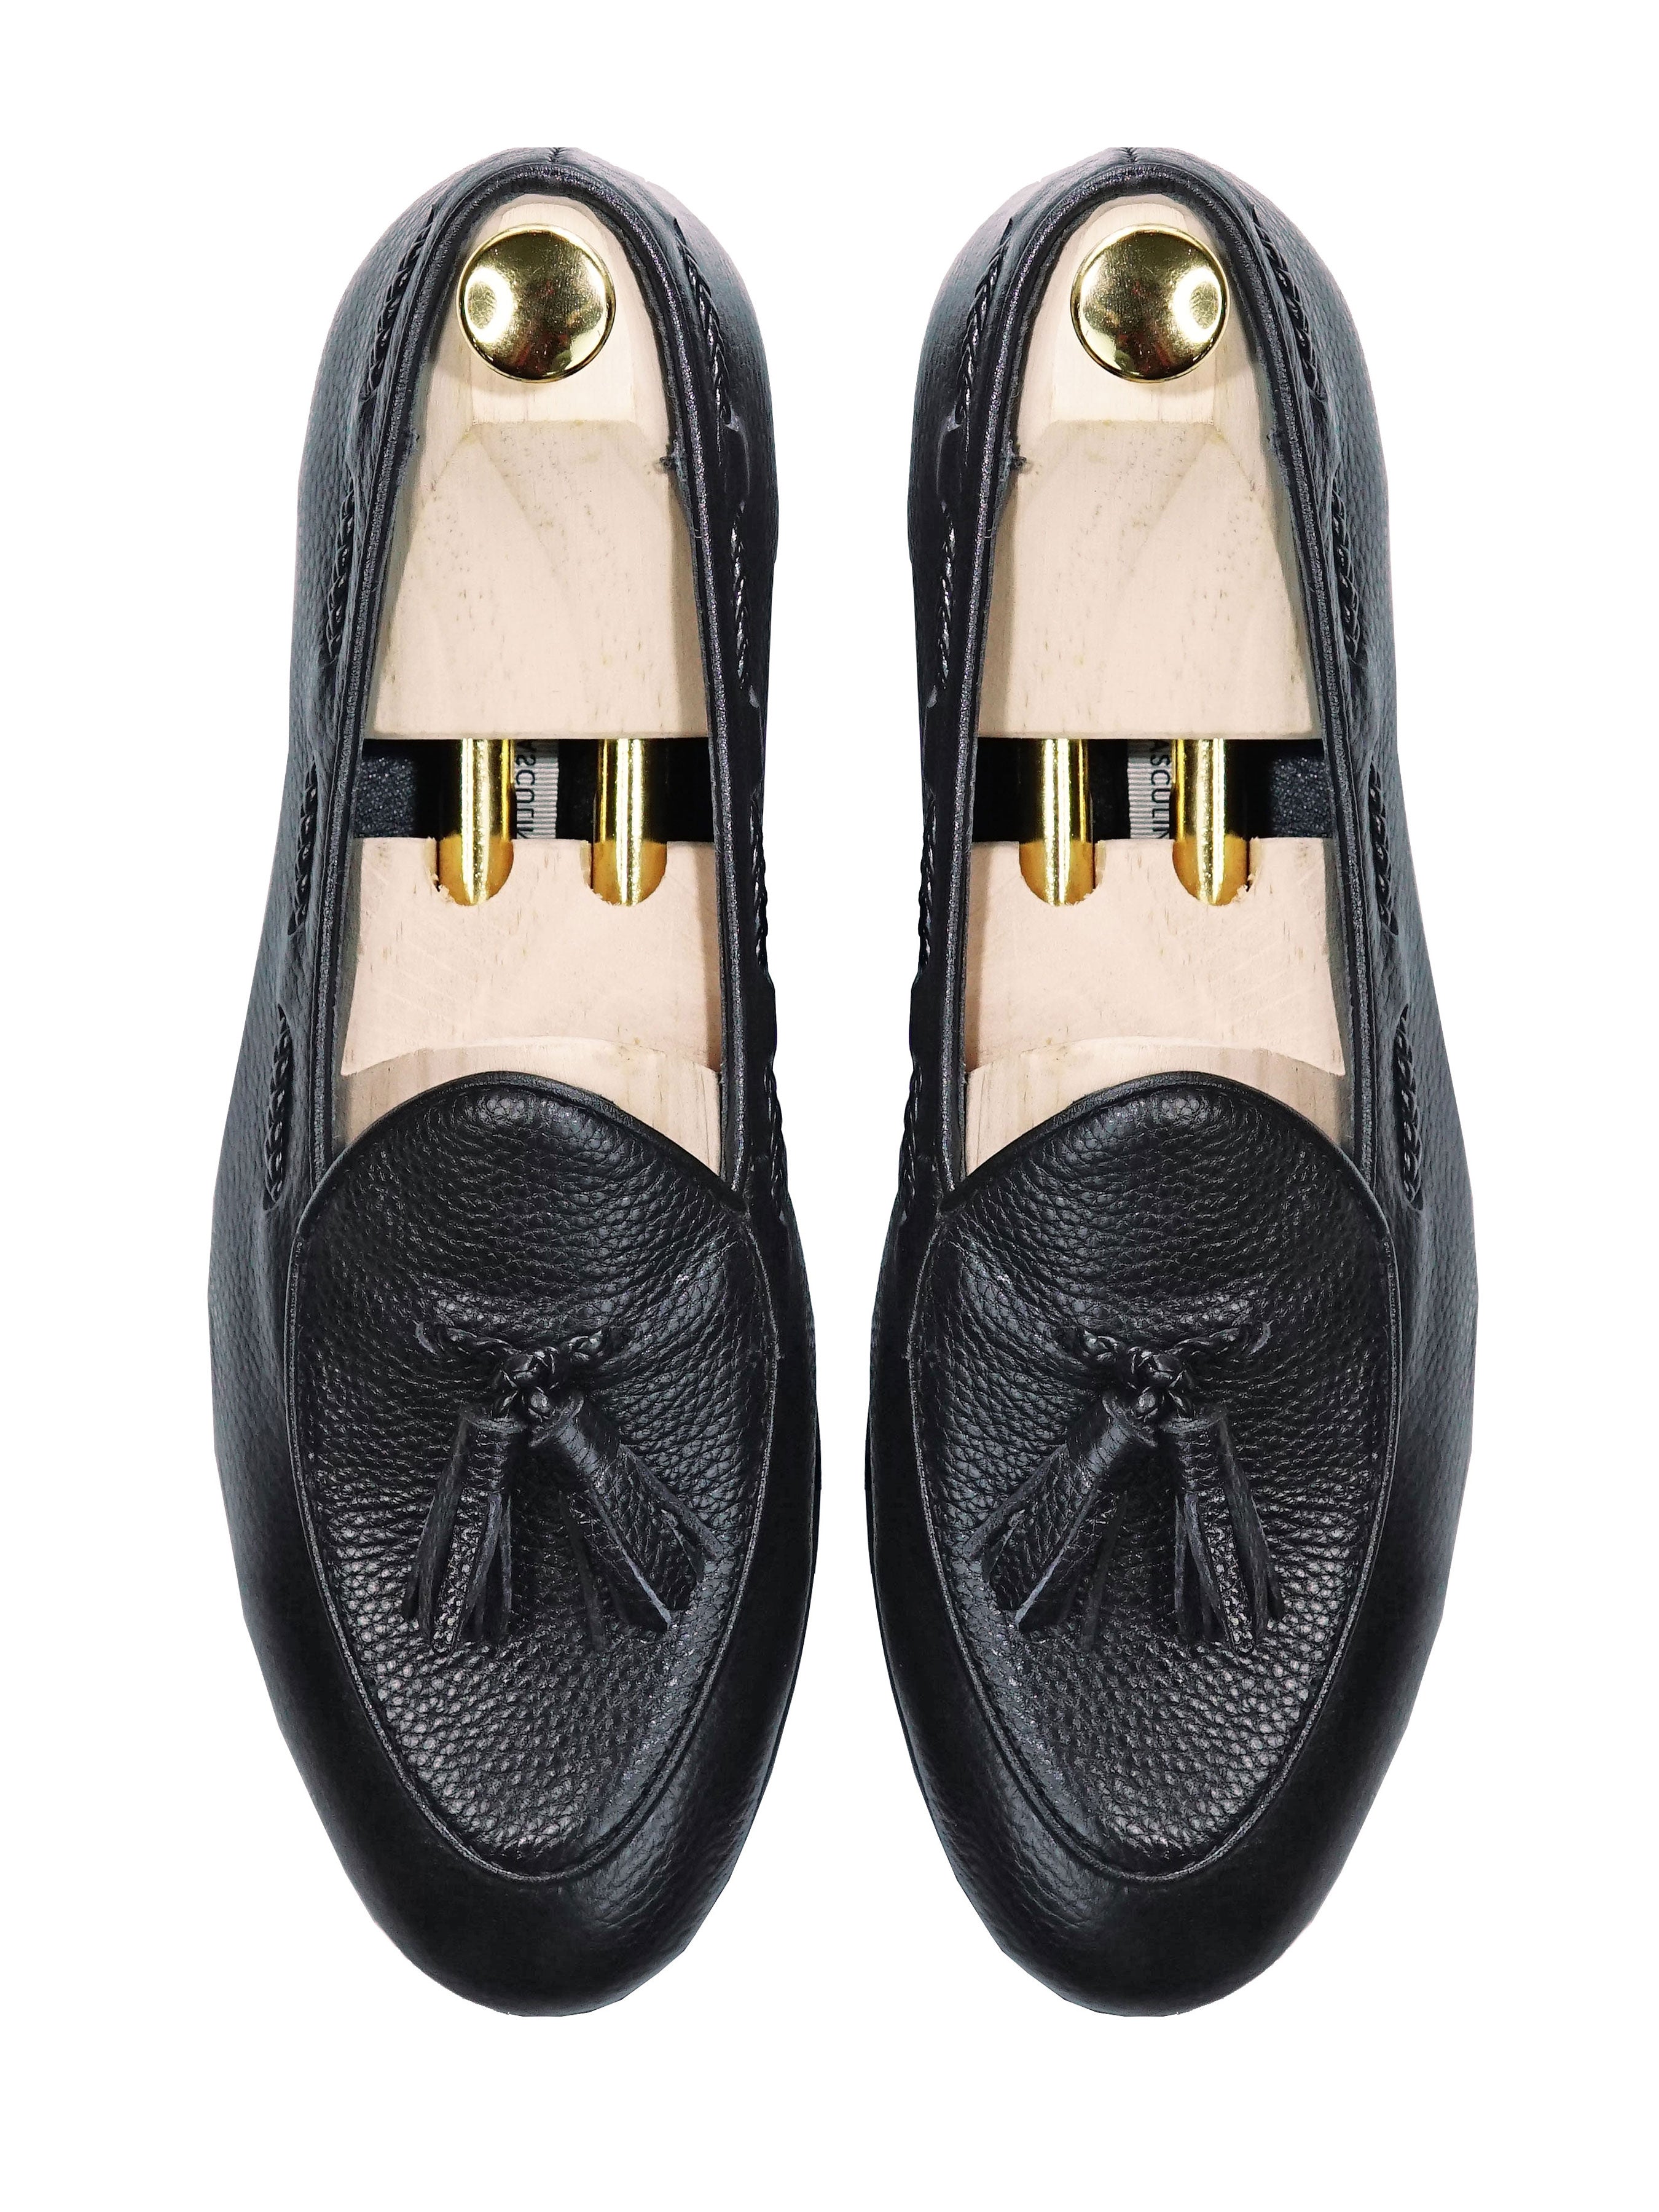 Belgian Loafer With Tassel - Black Pebble Grain Leather - Zeve Shoes